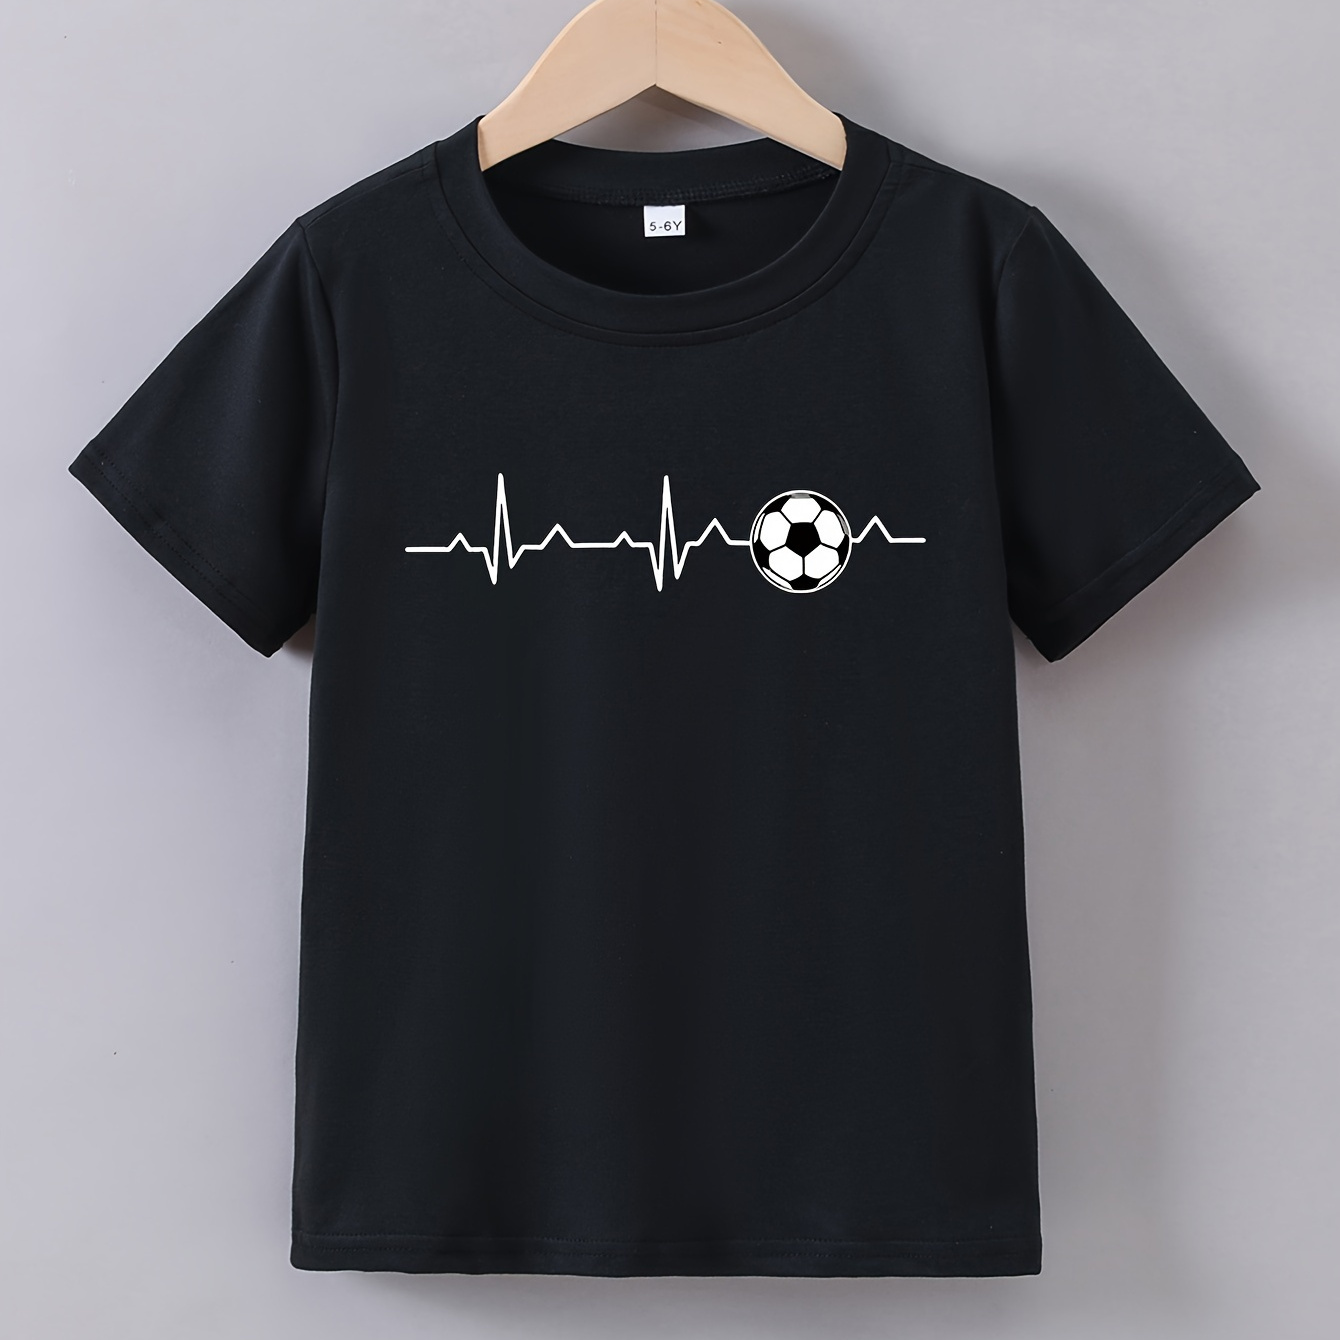 

Casual Comfy Boys' Summer Top - Football Print Short Sleeve Crew Neck T-shirt - Cute tee Gift